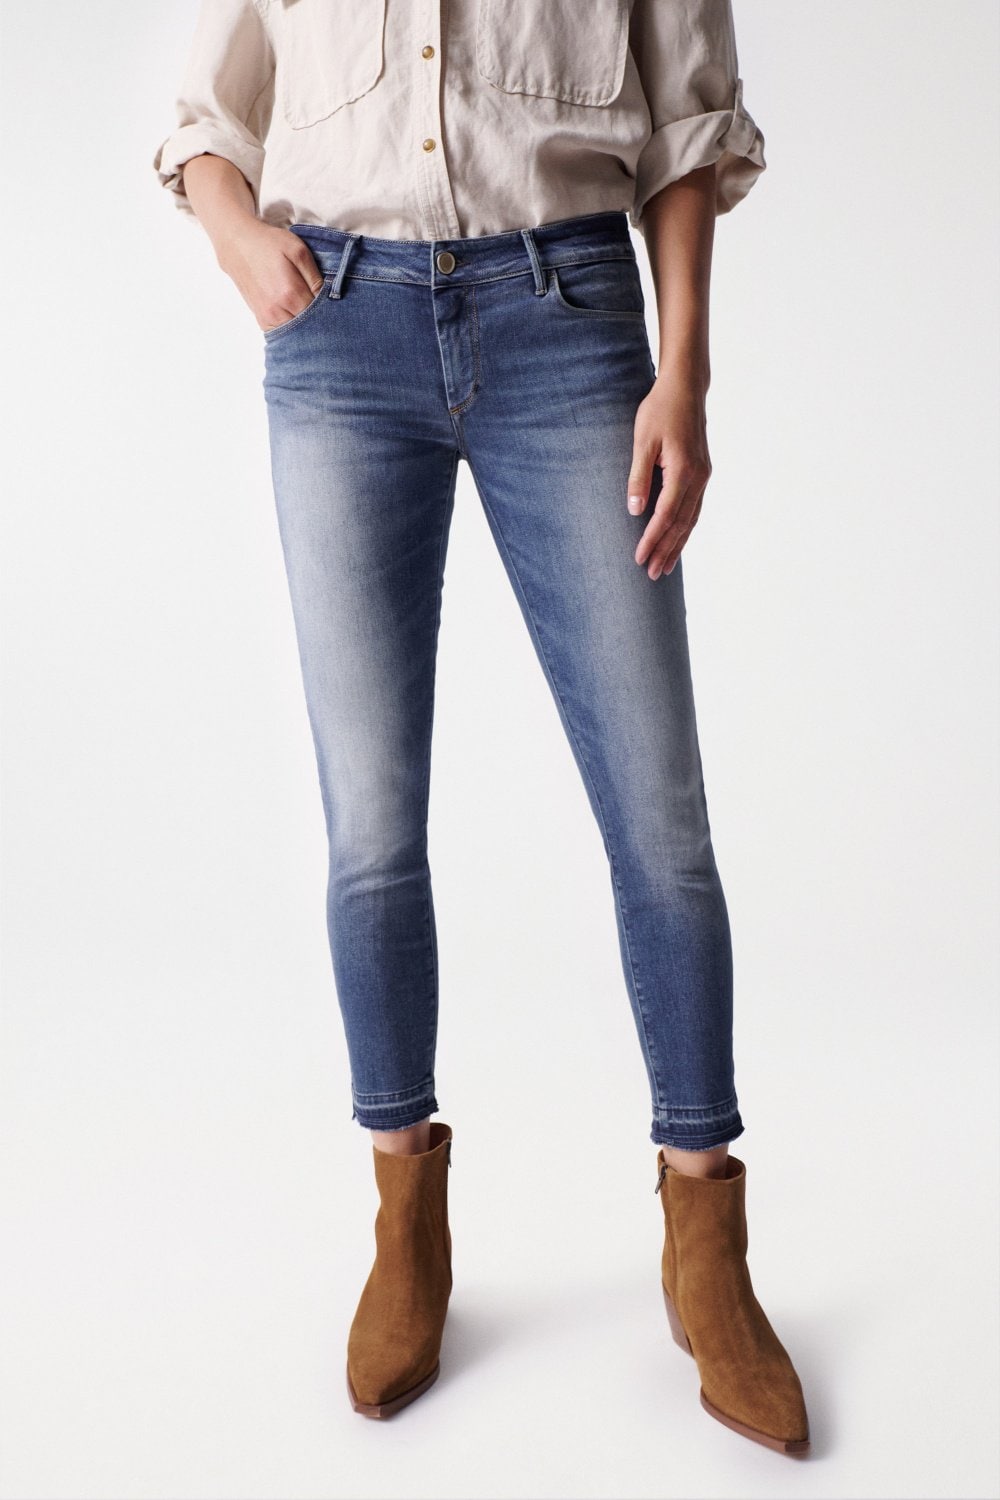 Wonder Cropped Skinny Push-Up in Medium Light Jeans Salsa Jeans   